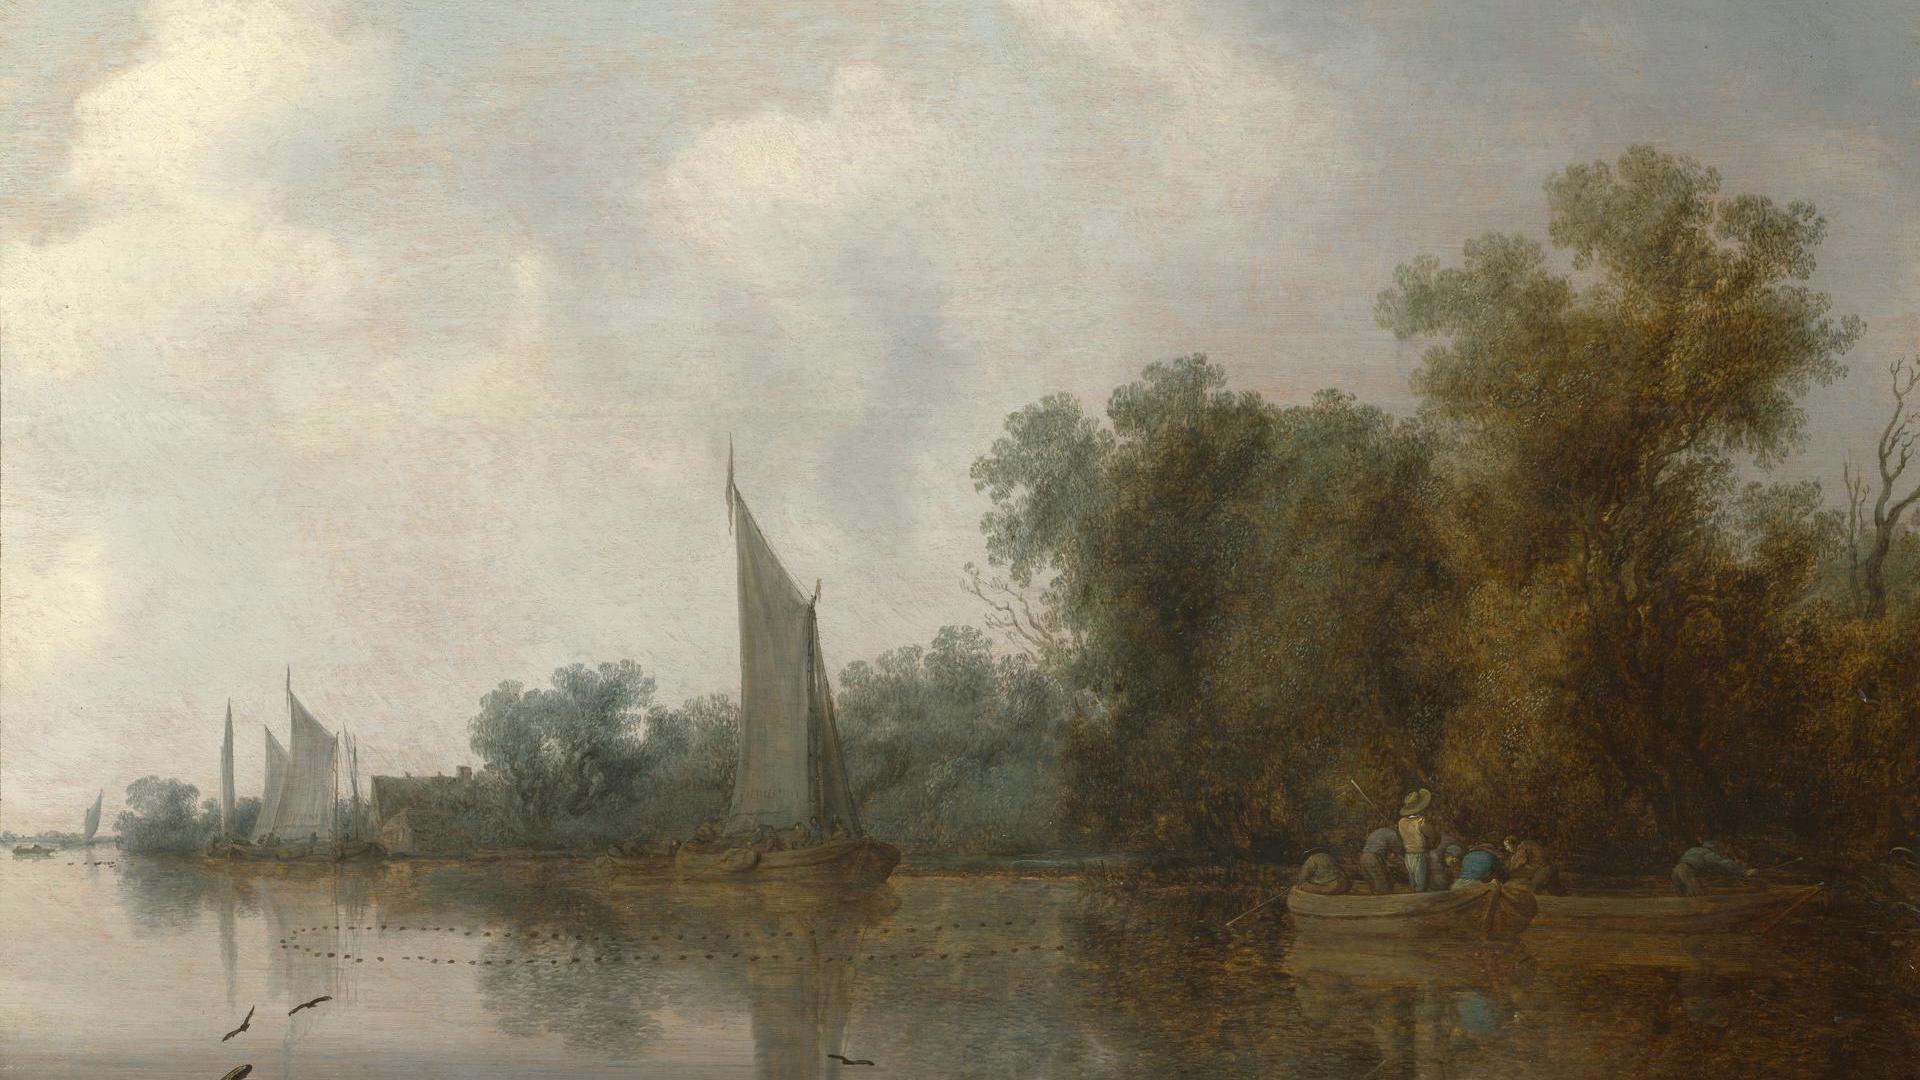 A River with Fishermen drawing a Net by Salomon van Ruysdael